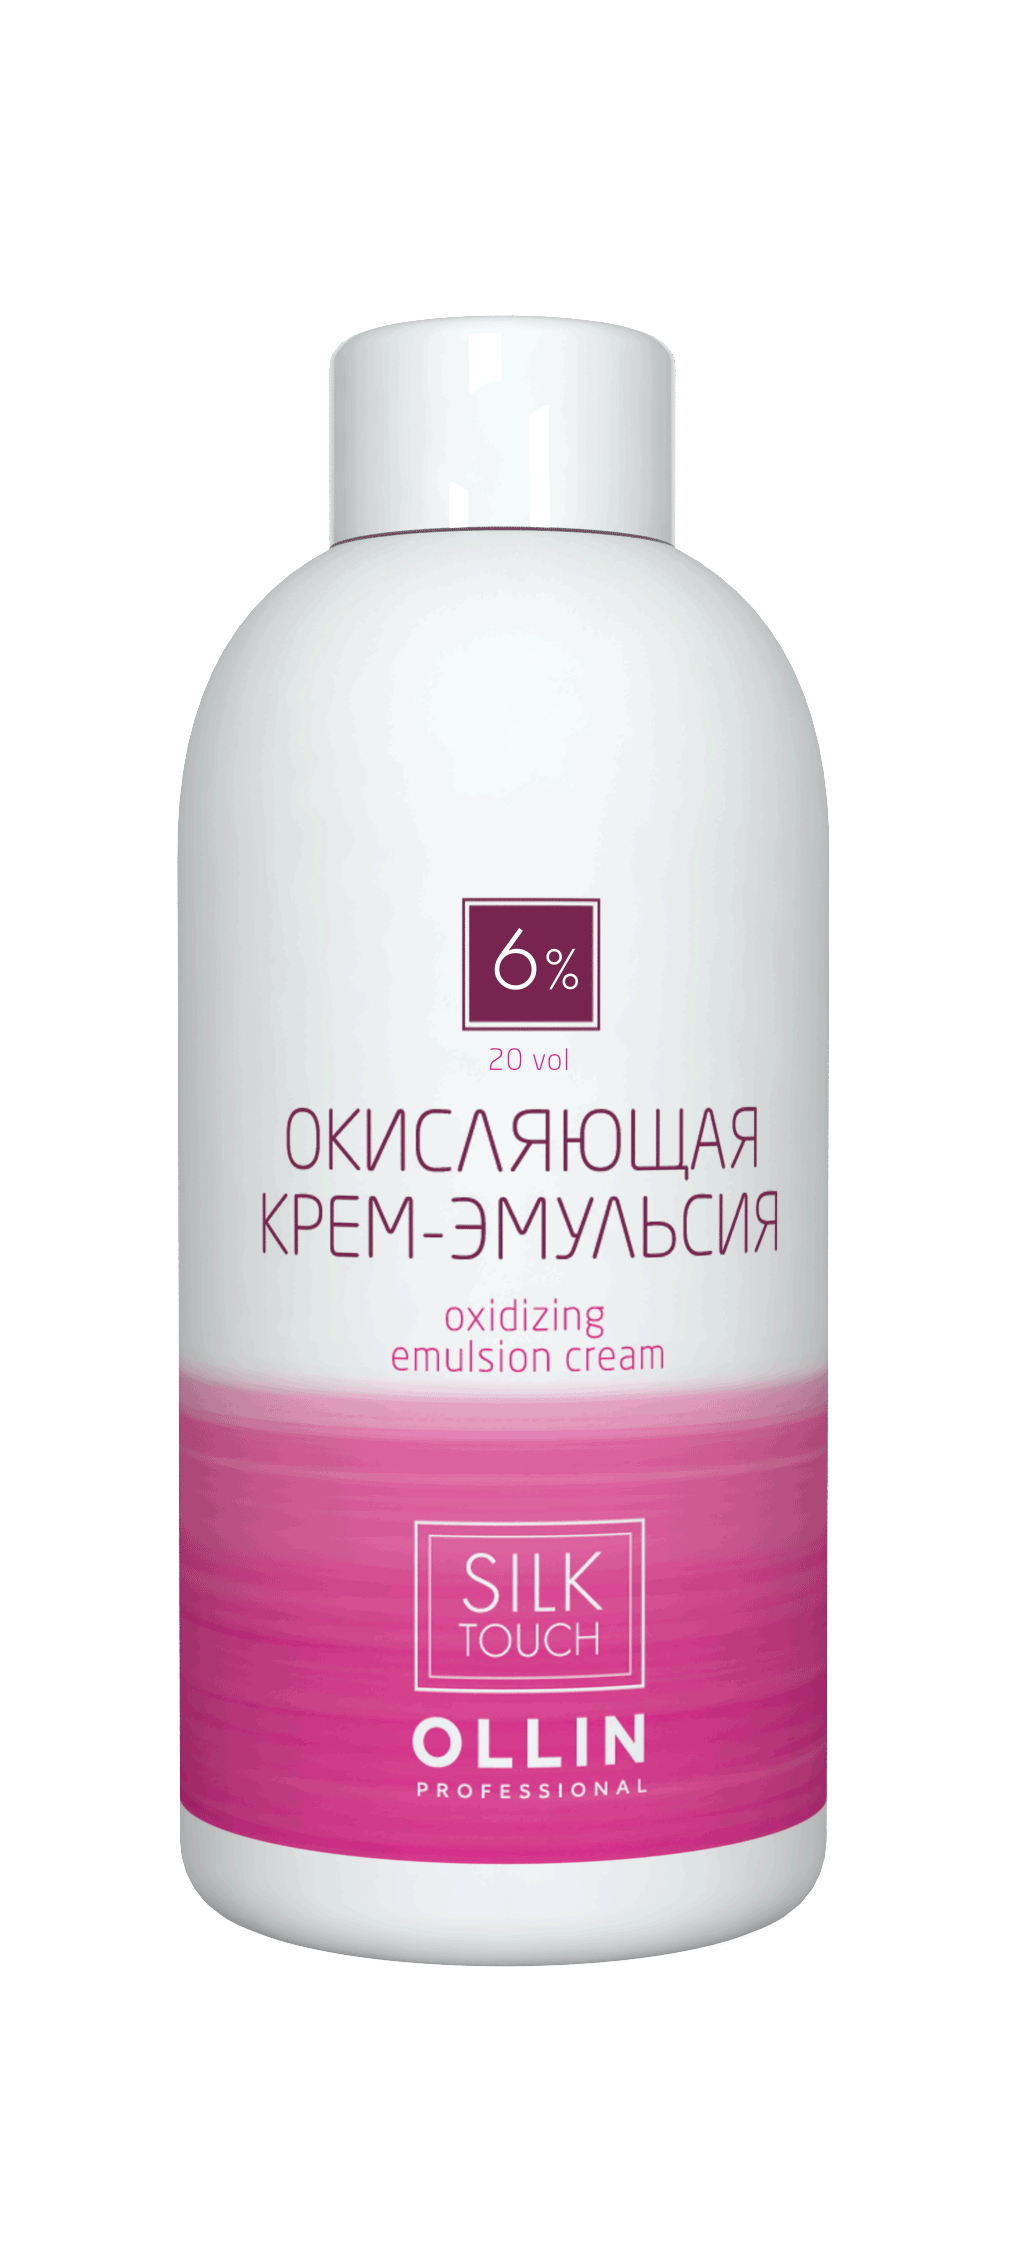 OLLIN silk touch.  МИНИ 6% 20vol. Окисляющая крем-эмульсия 90мл